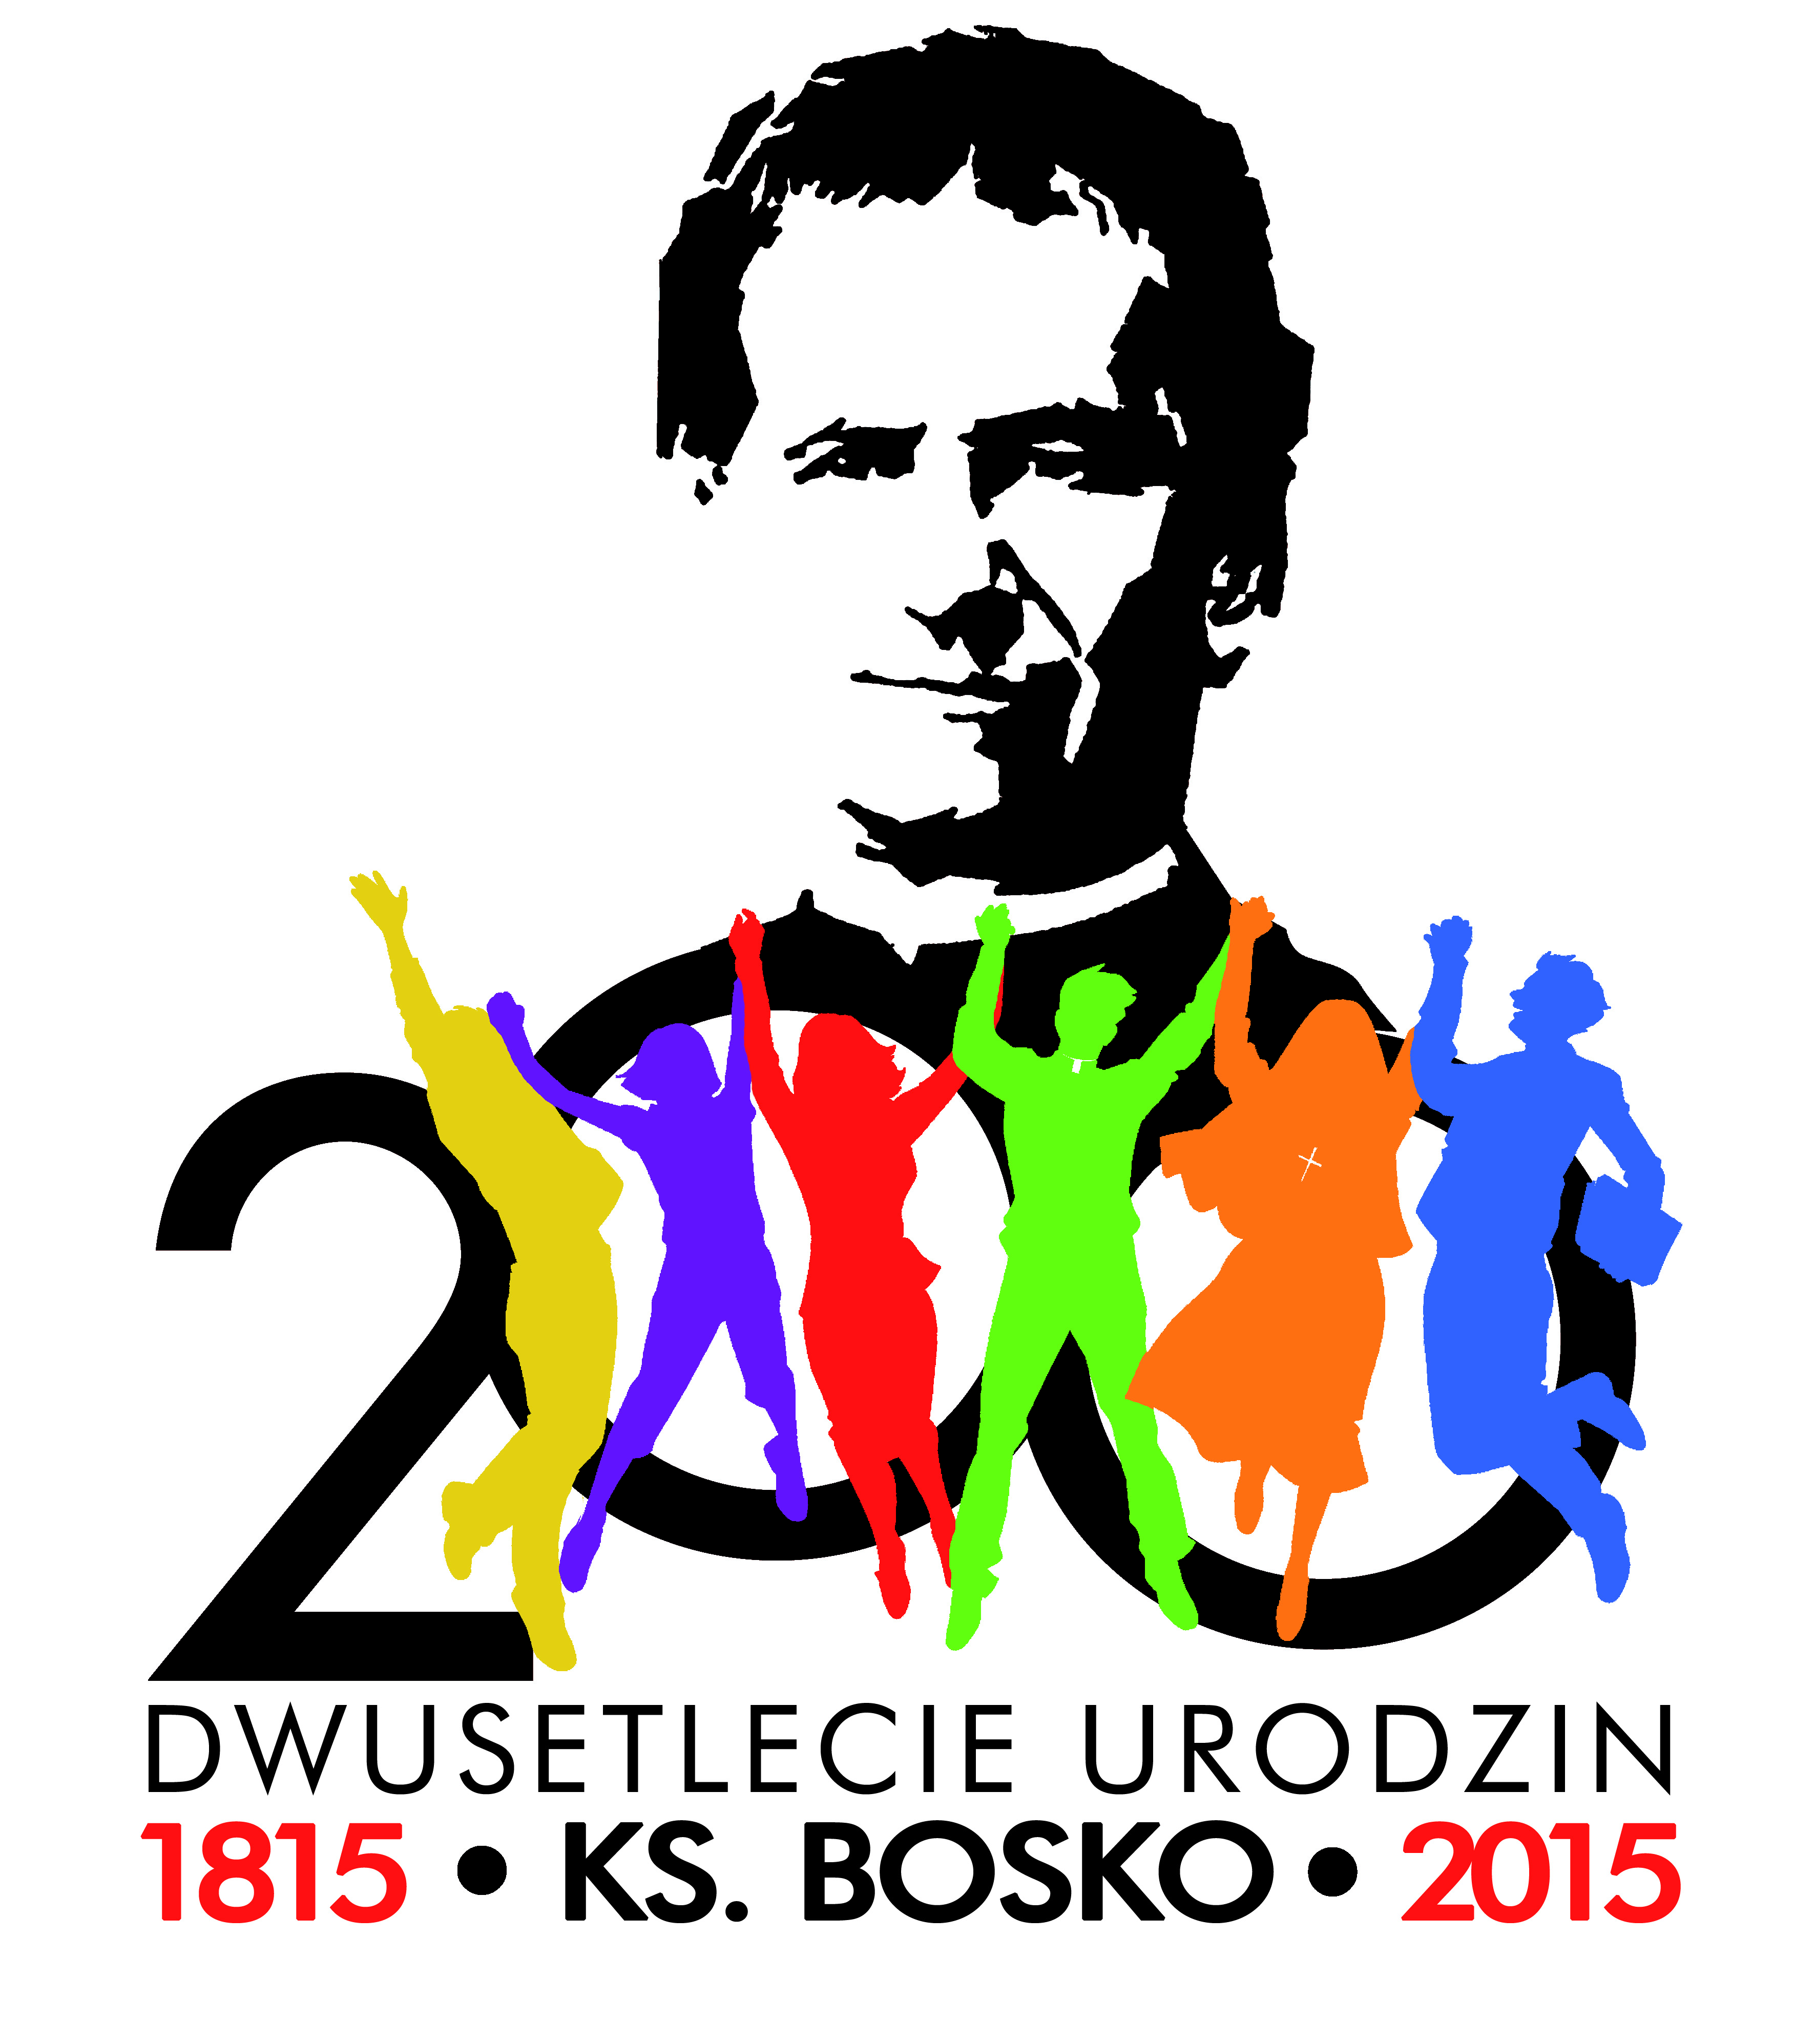 http://boscoteam.pl/wp-content/uploads/2014/09/logo_dwusetlecie_kolorowe.jpg